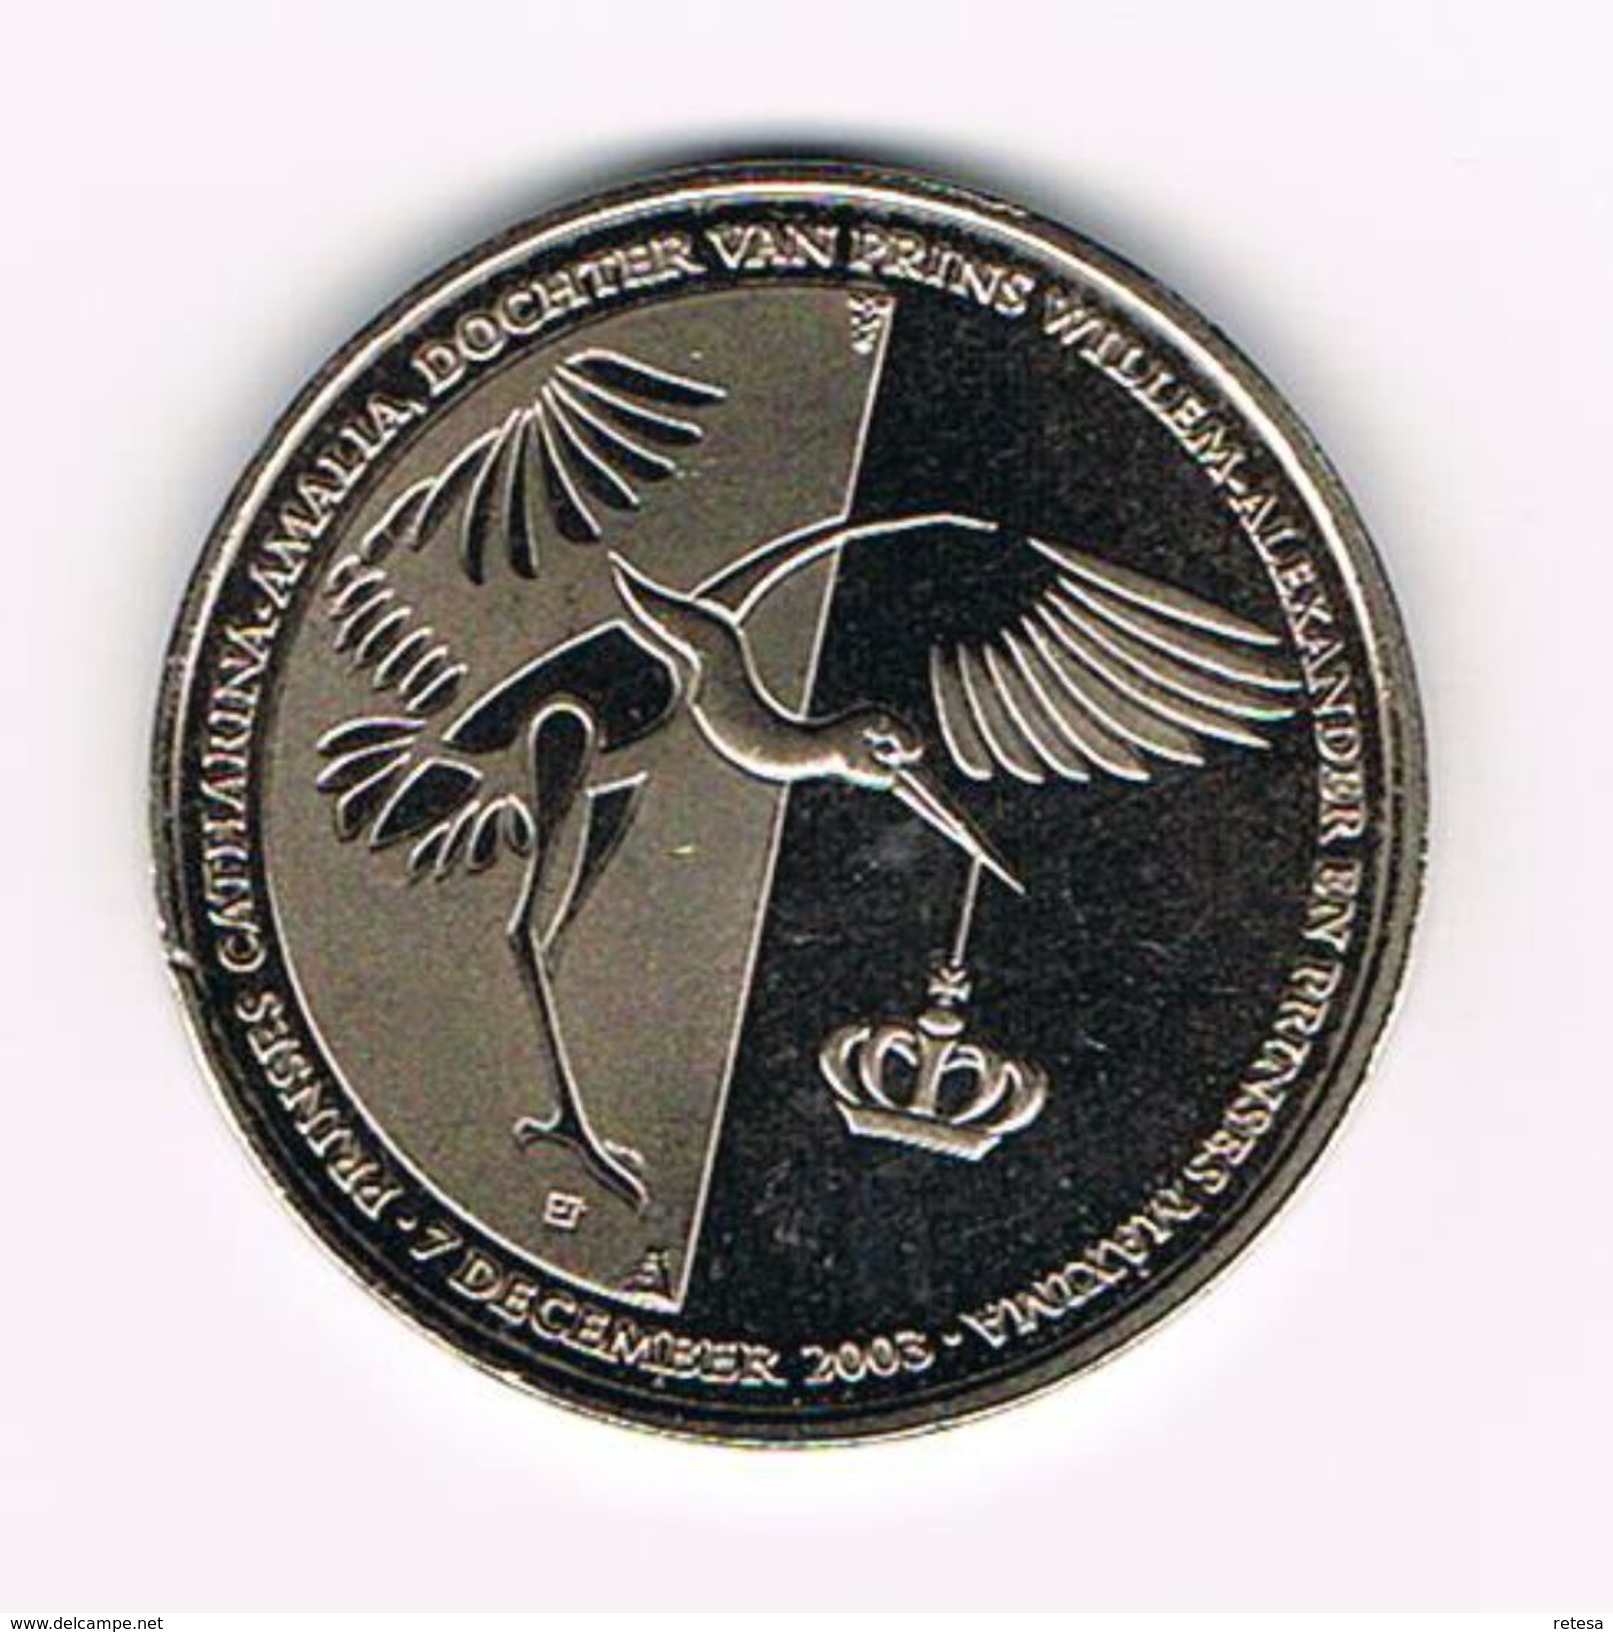 ¨¨ NEDERLAND  HERDENKINGSMUNT  GEBOORTE  PRINSES AMALIA 7 DECEMBER  2003 - Monedas Elongadas (elongated Coins)